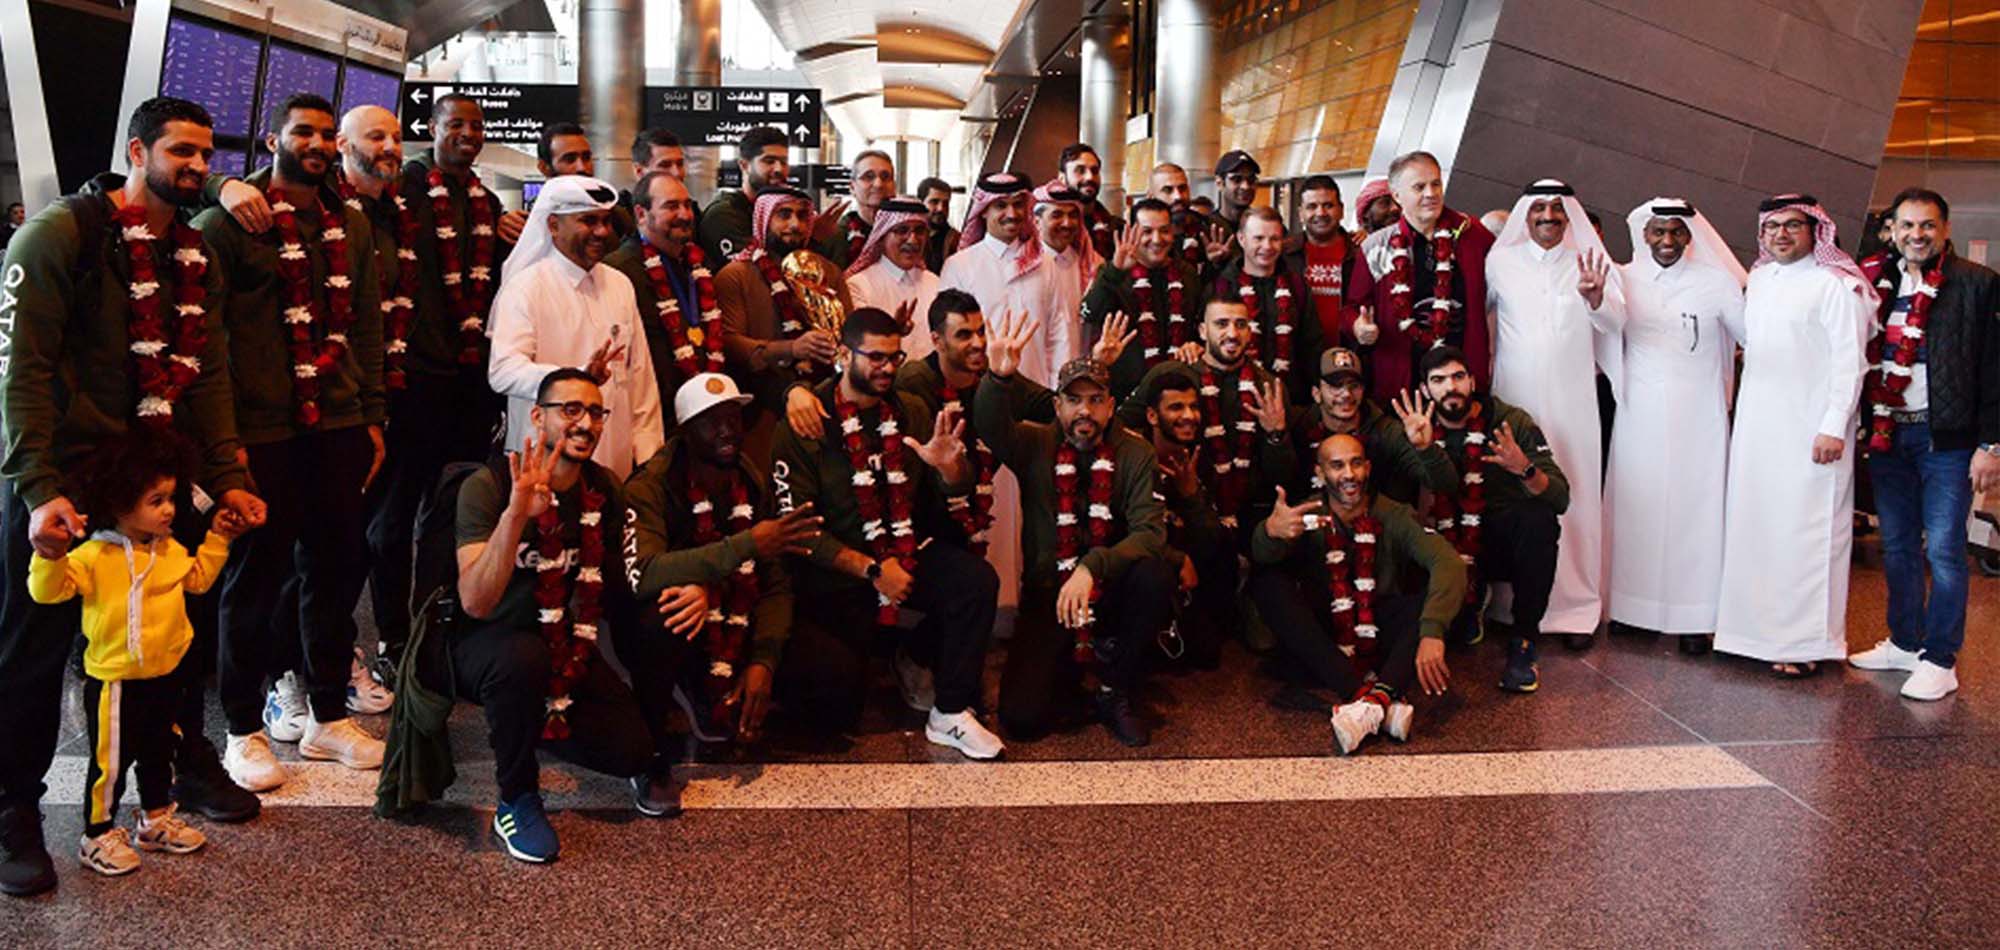 Team Qatar arrive to warm welcome